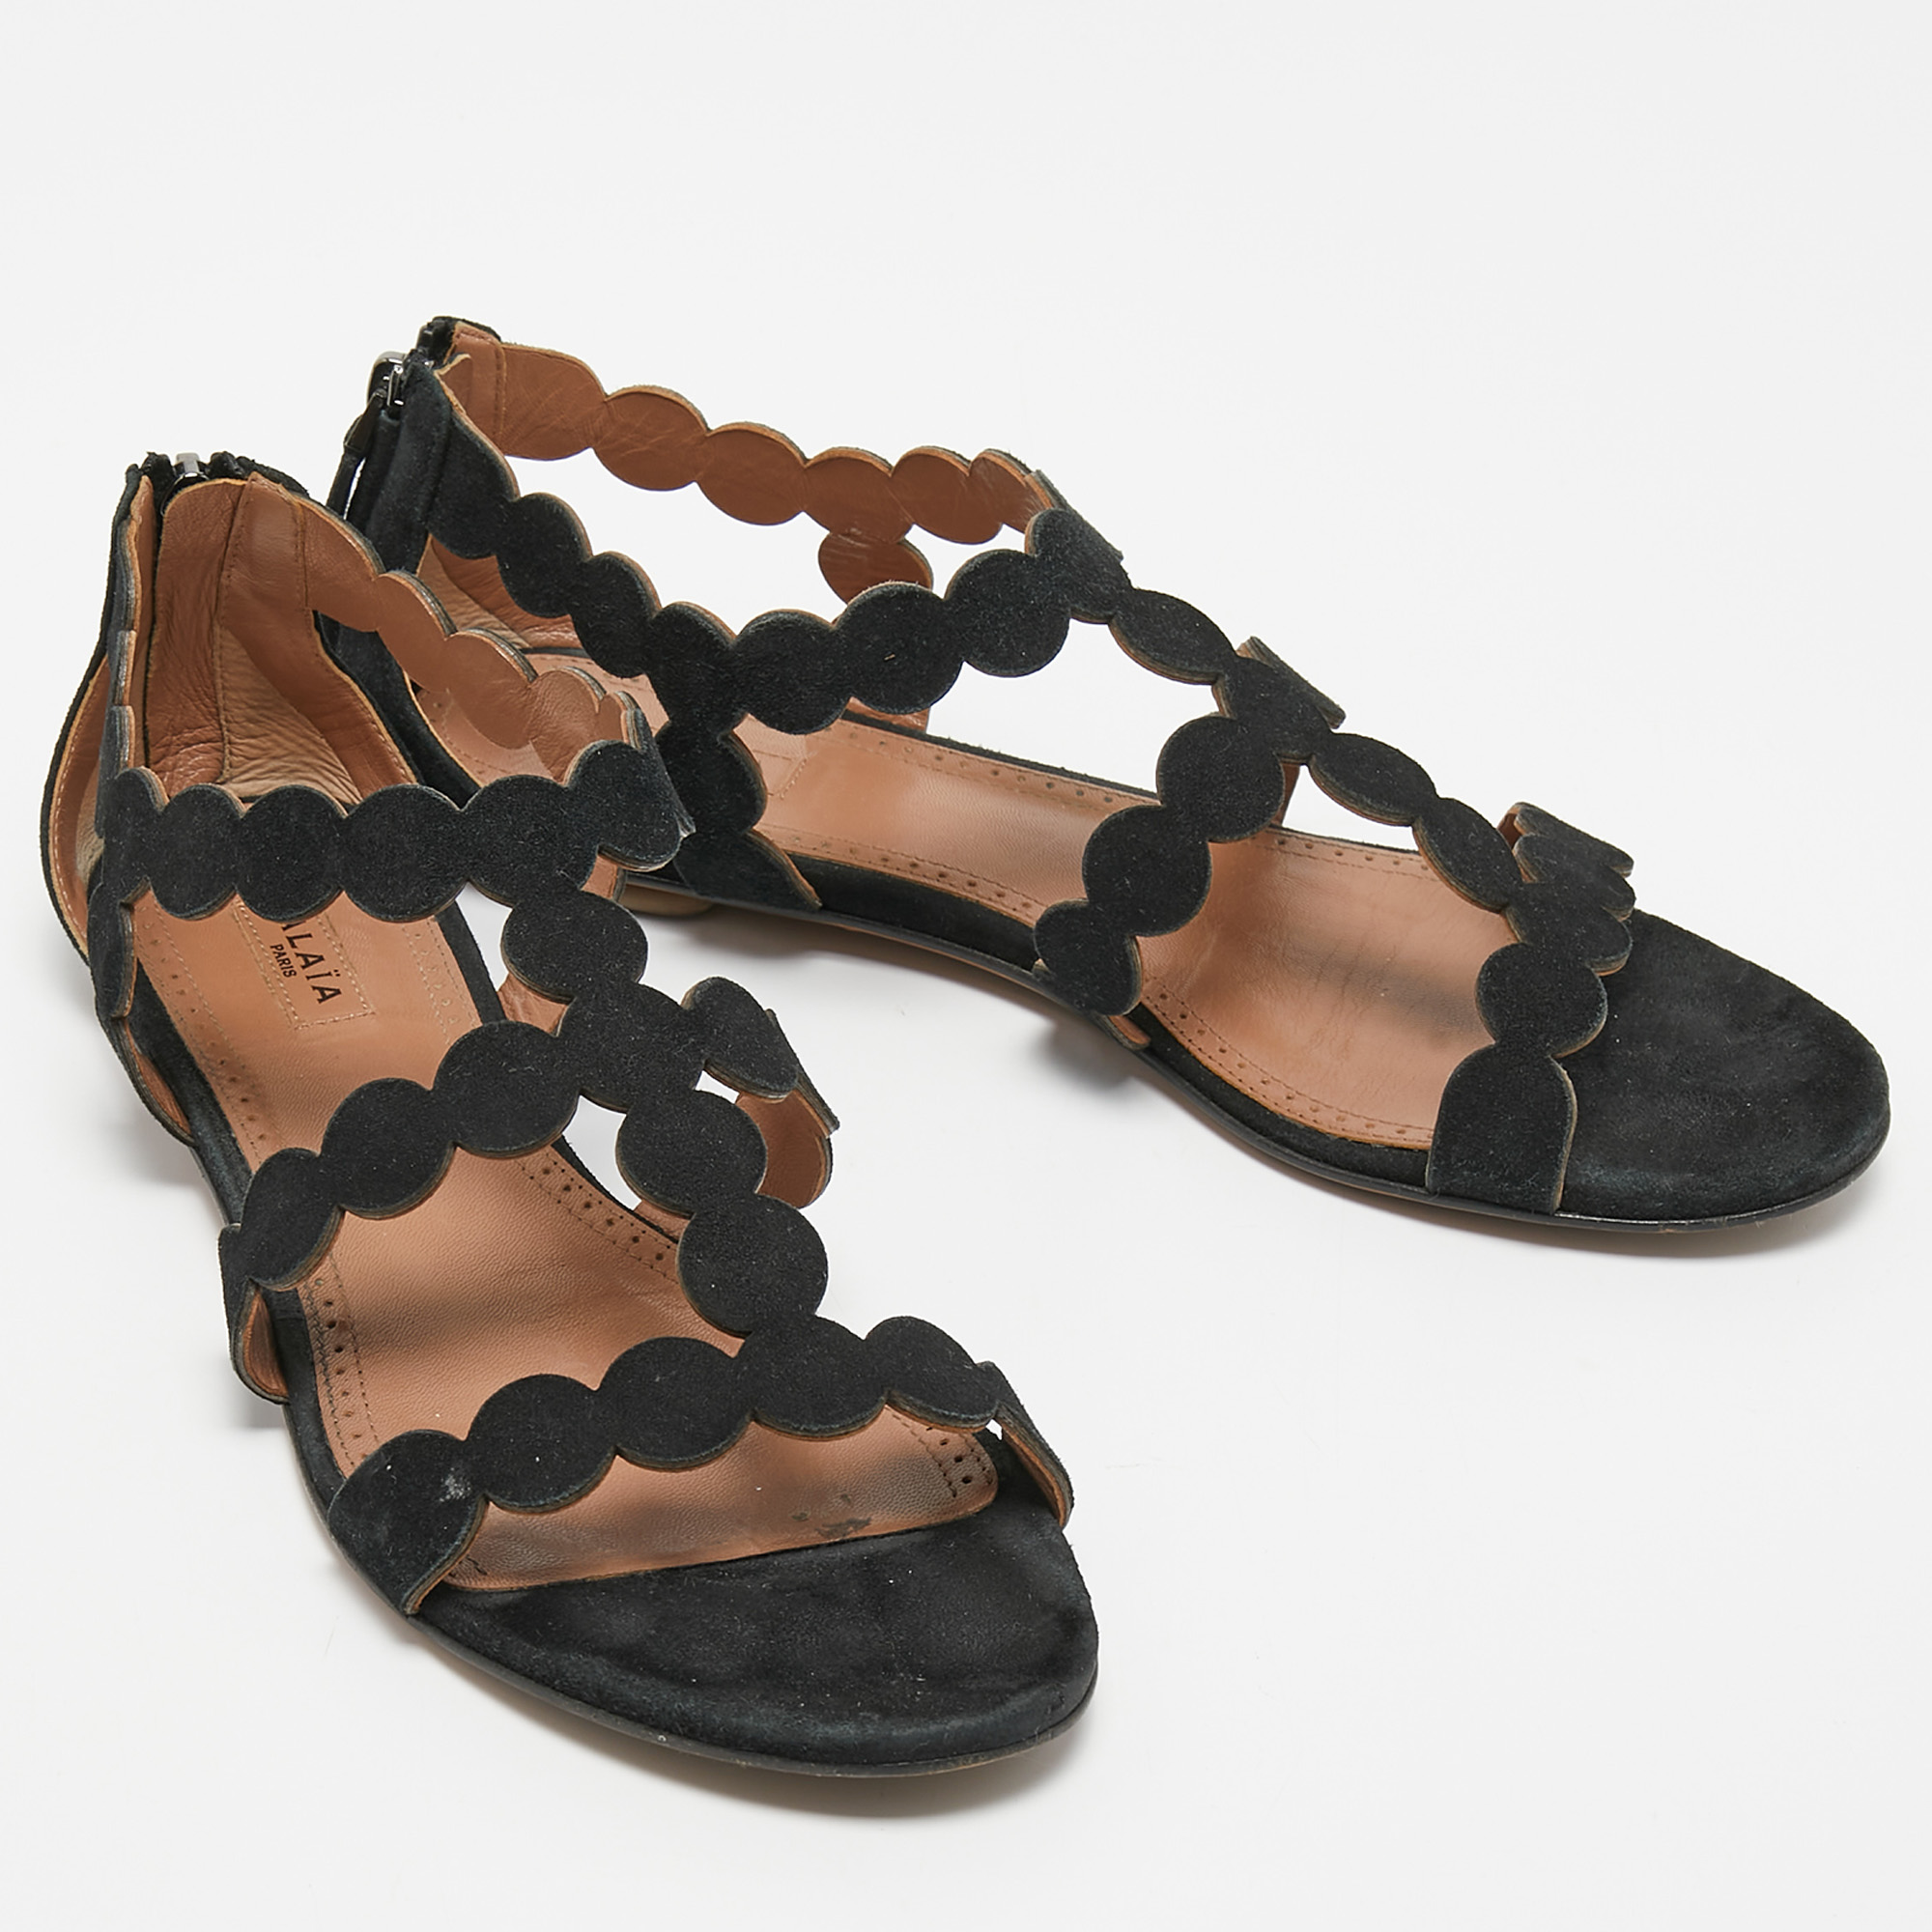 Alaia Black Suede Scallop Flat Sandals Size 39